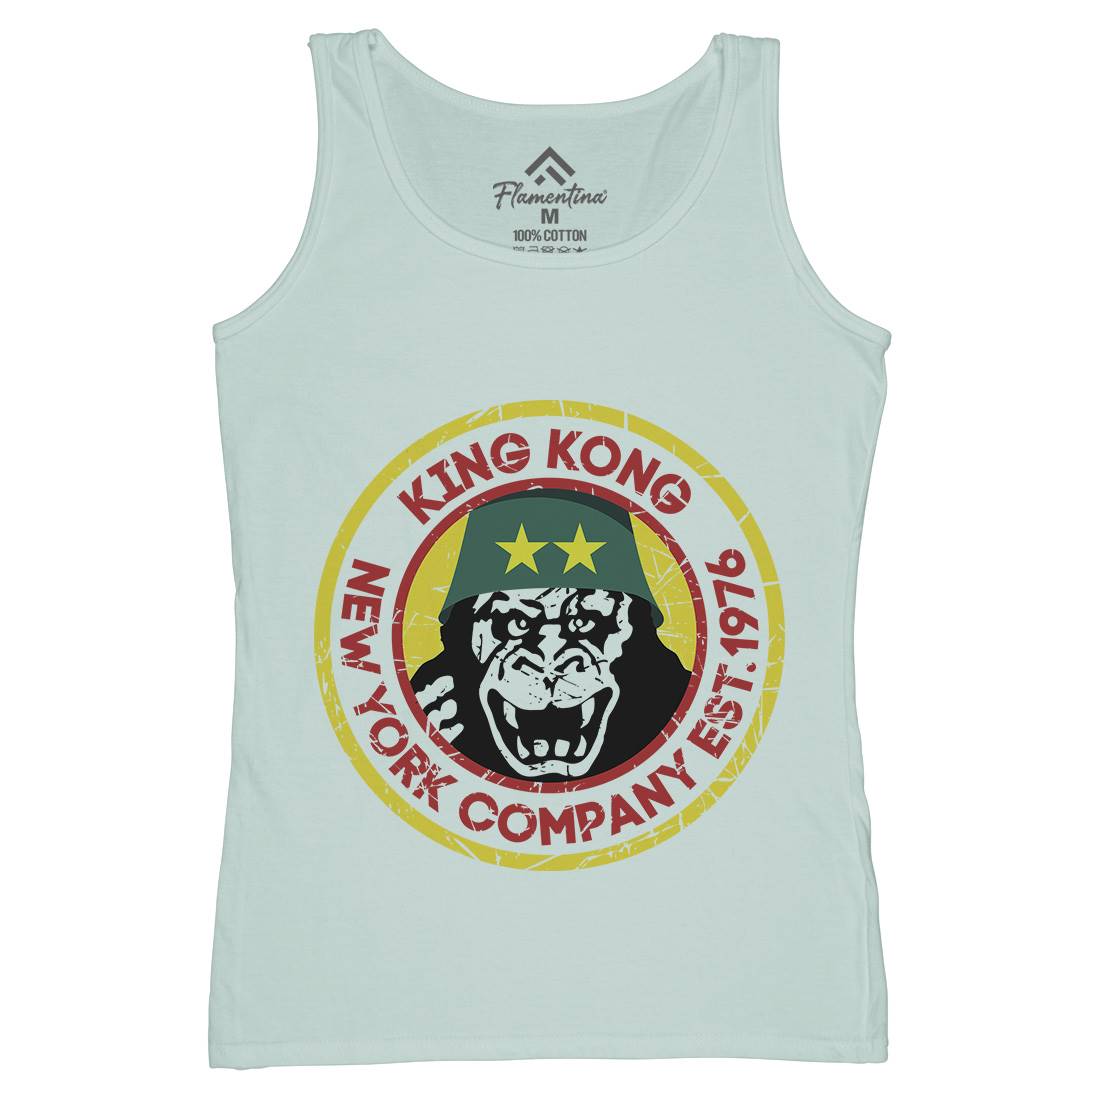 King Kong Company Womens Organic Tank Top Vest Retro D362